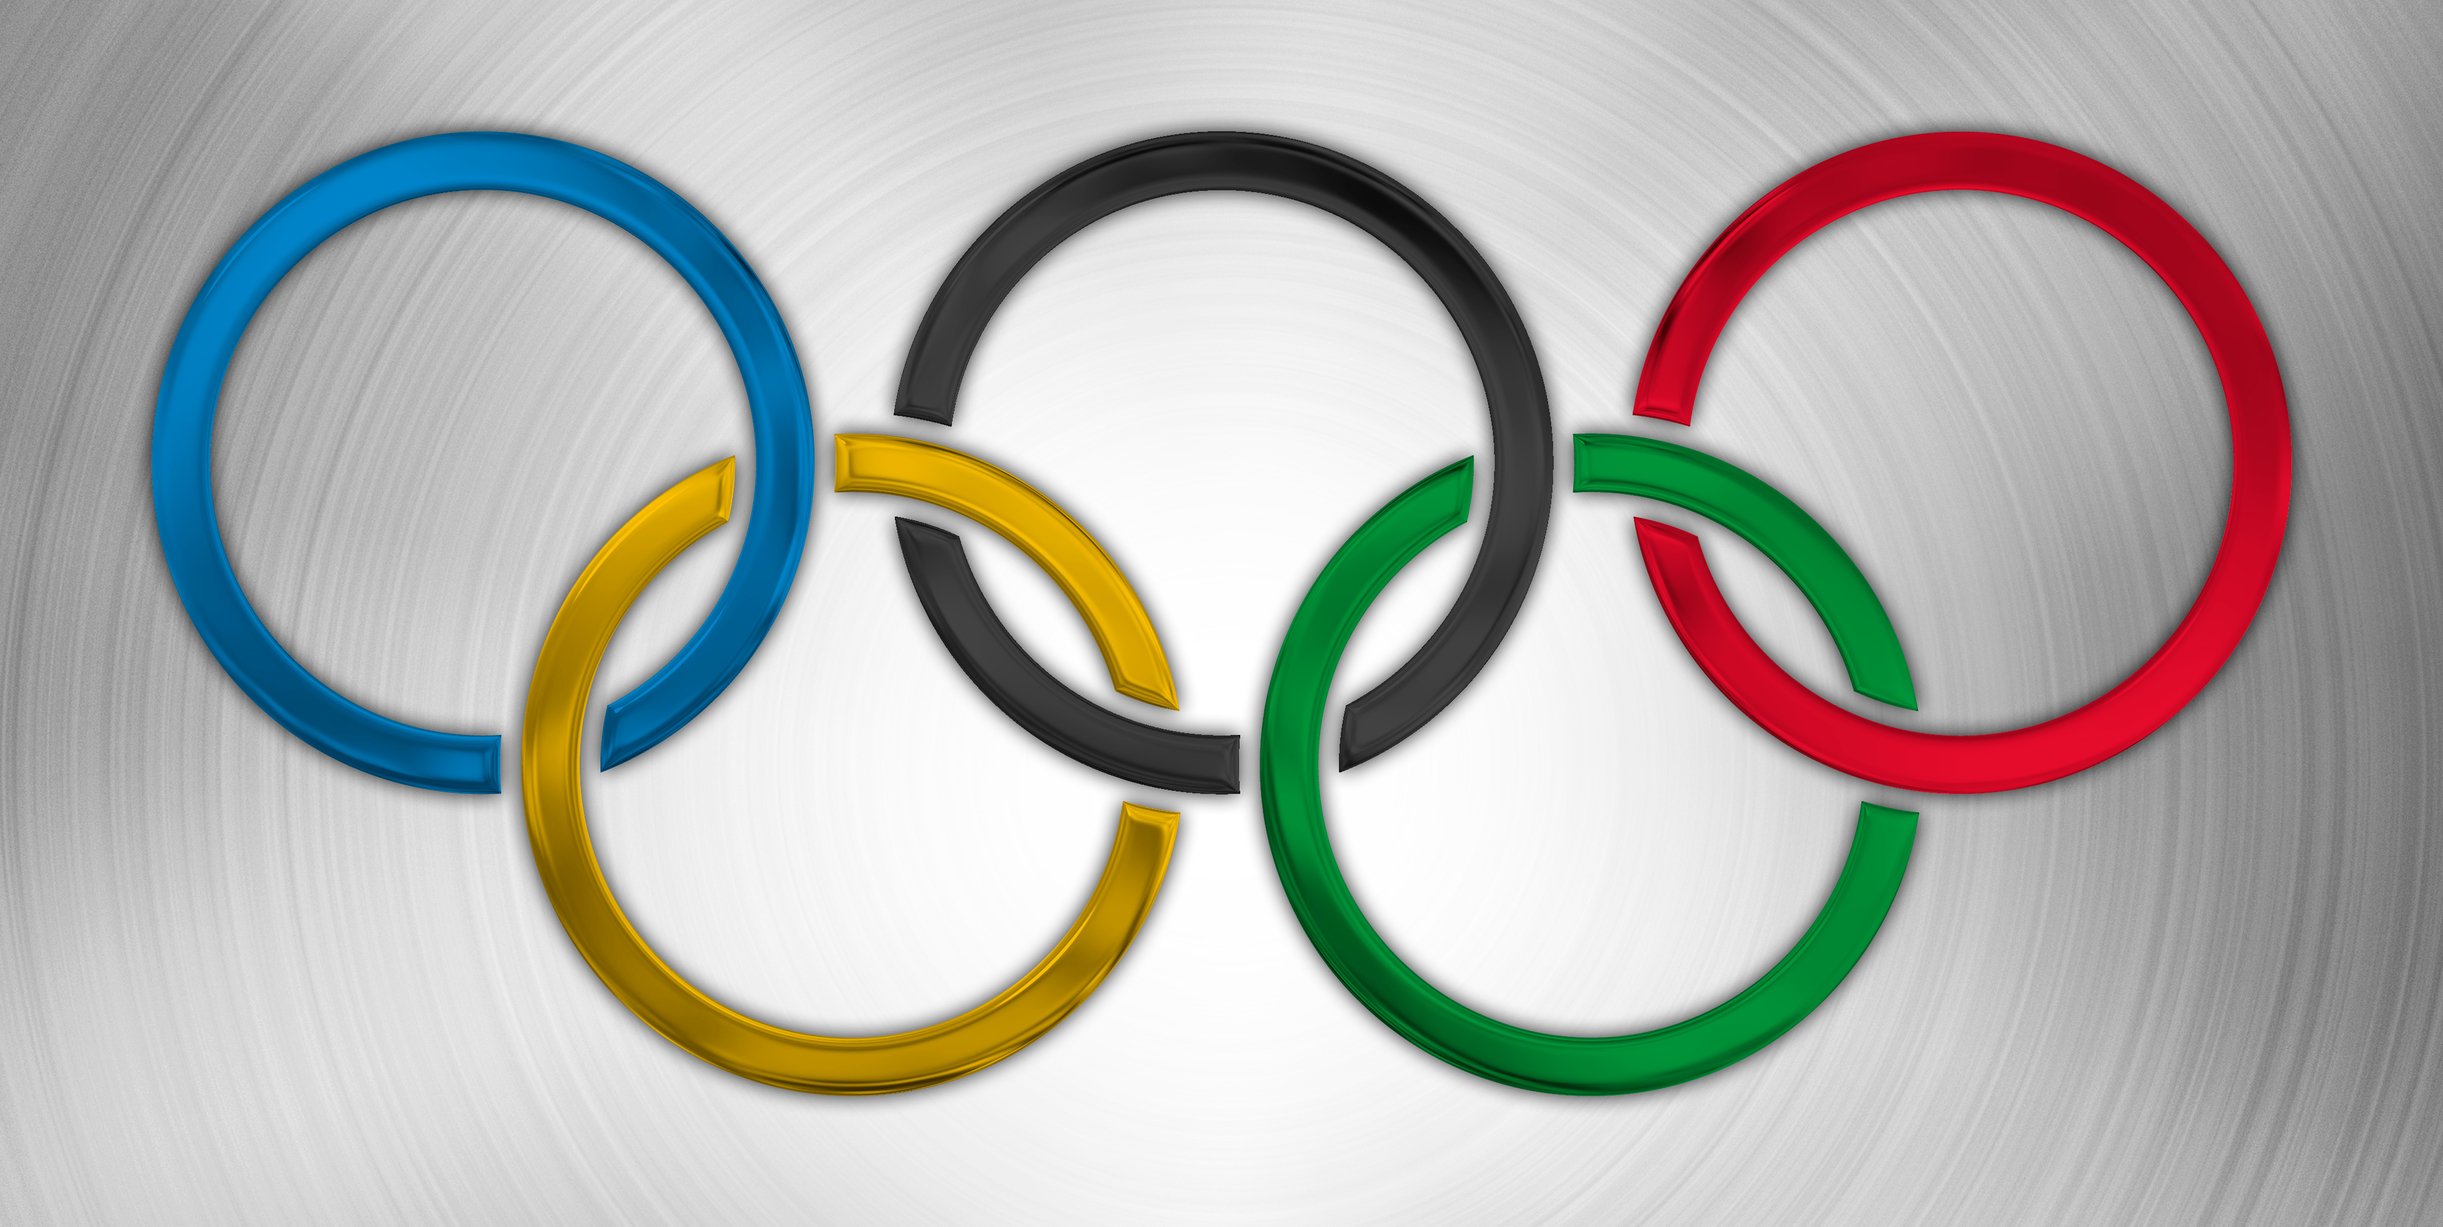 Олимпийские кольца талисманы